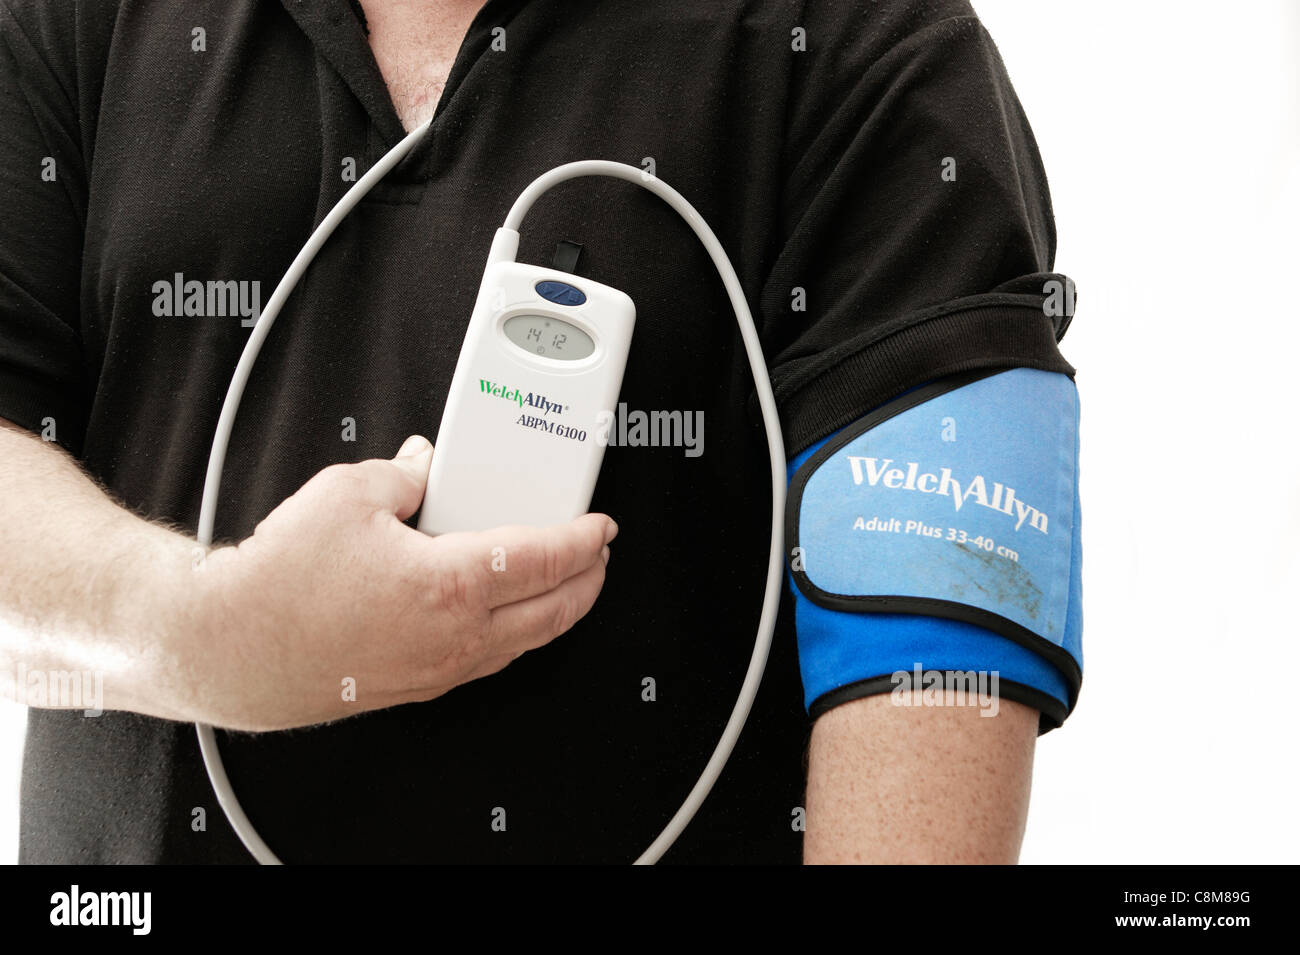 https://c8.alamy.com/comp/C8M89G/24-hour-blood-pressure-monitoring-unit-taking-readings-every-half-C8M89G.jpg